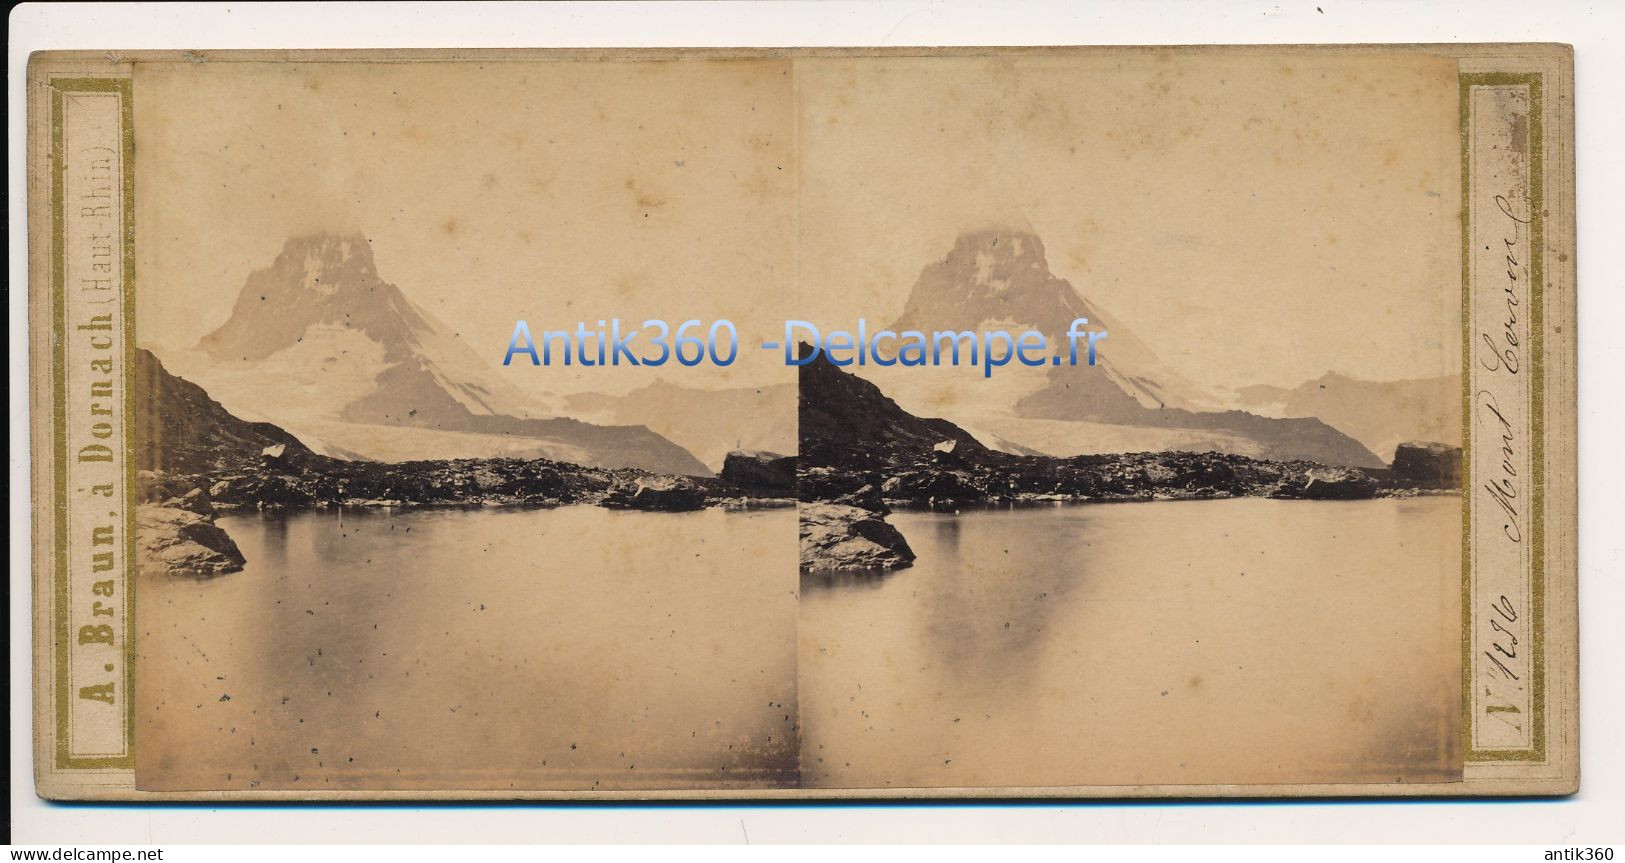 Photographie Ancienne Vue Stéréoscopique Circa 1860 Suisse Vue De Zermatt Photographe Adolphe BRAUN - Stereoscopic